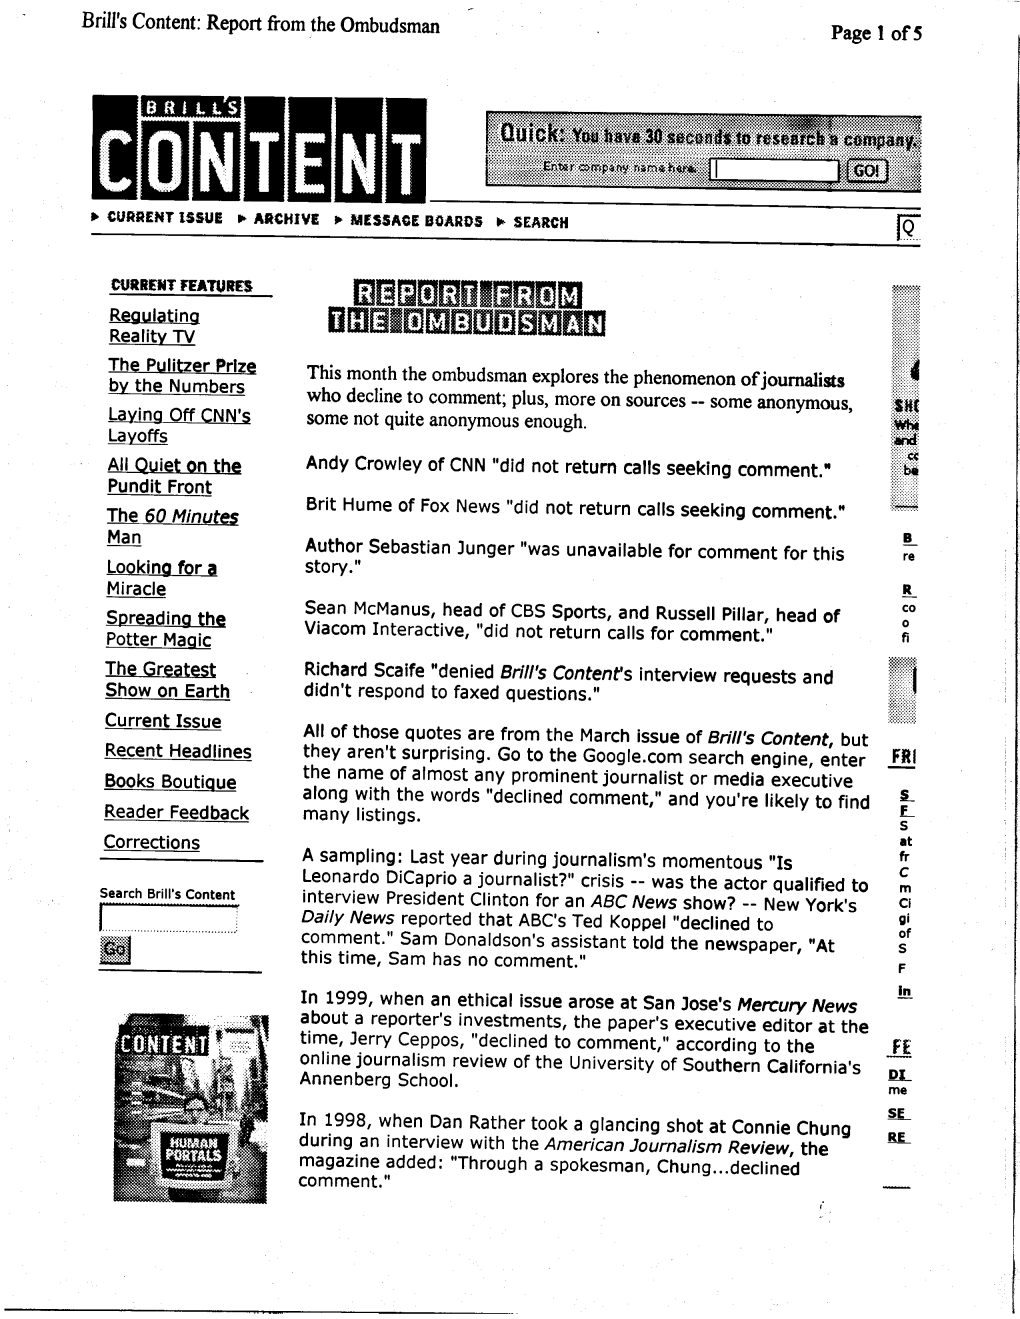 Michael Gartner's May 2001 Ombudsman Report